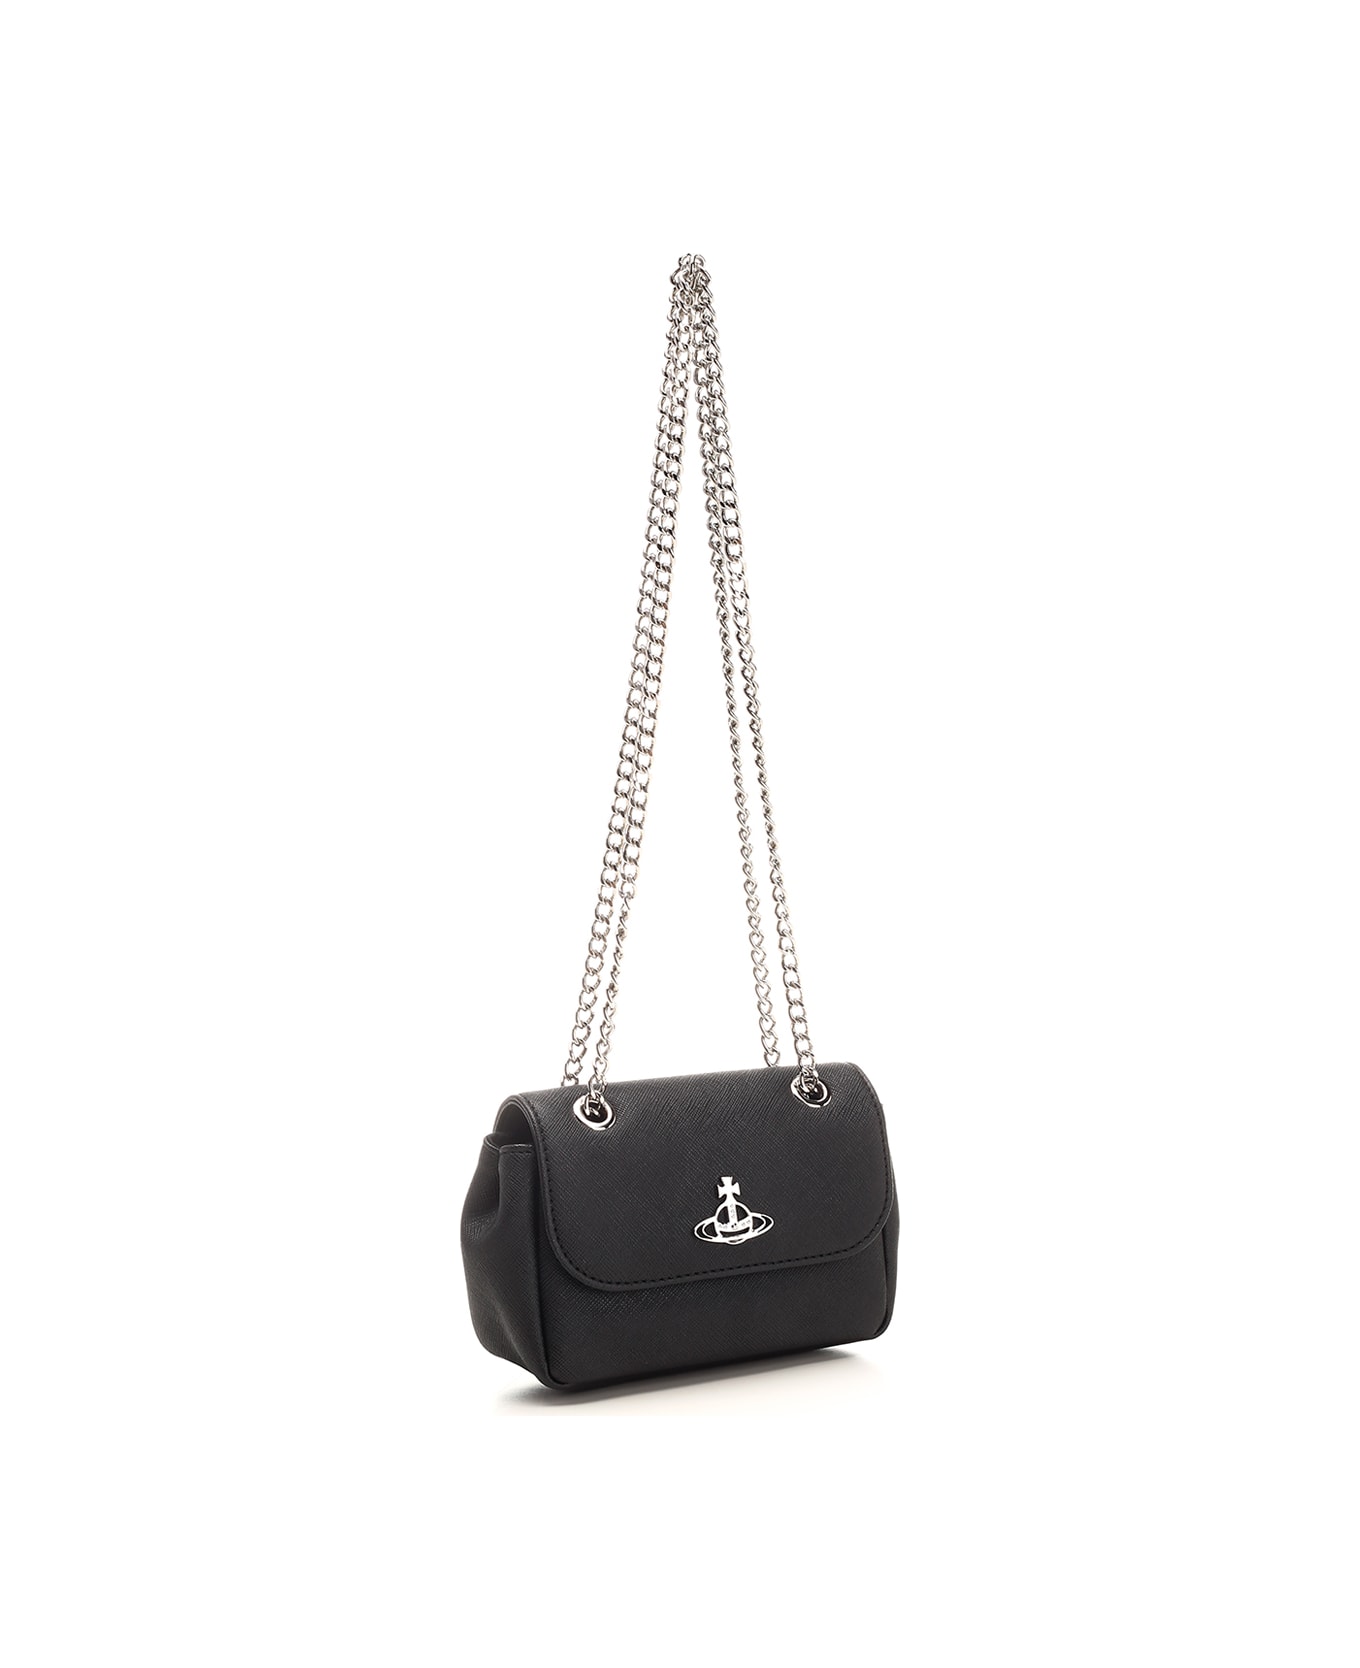 Vivienne Westwood Shoulder Bag With Chain - Nero 財布